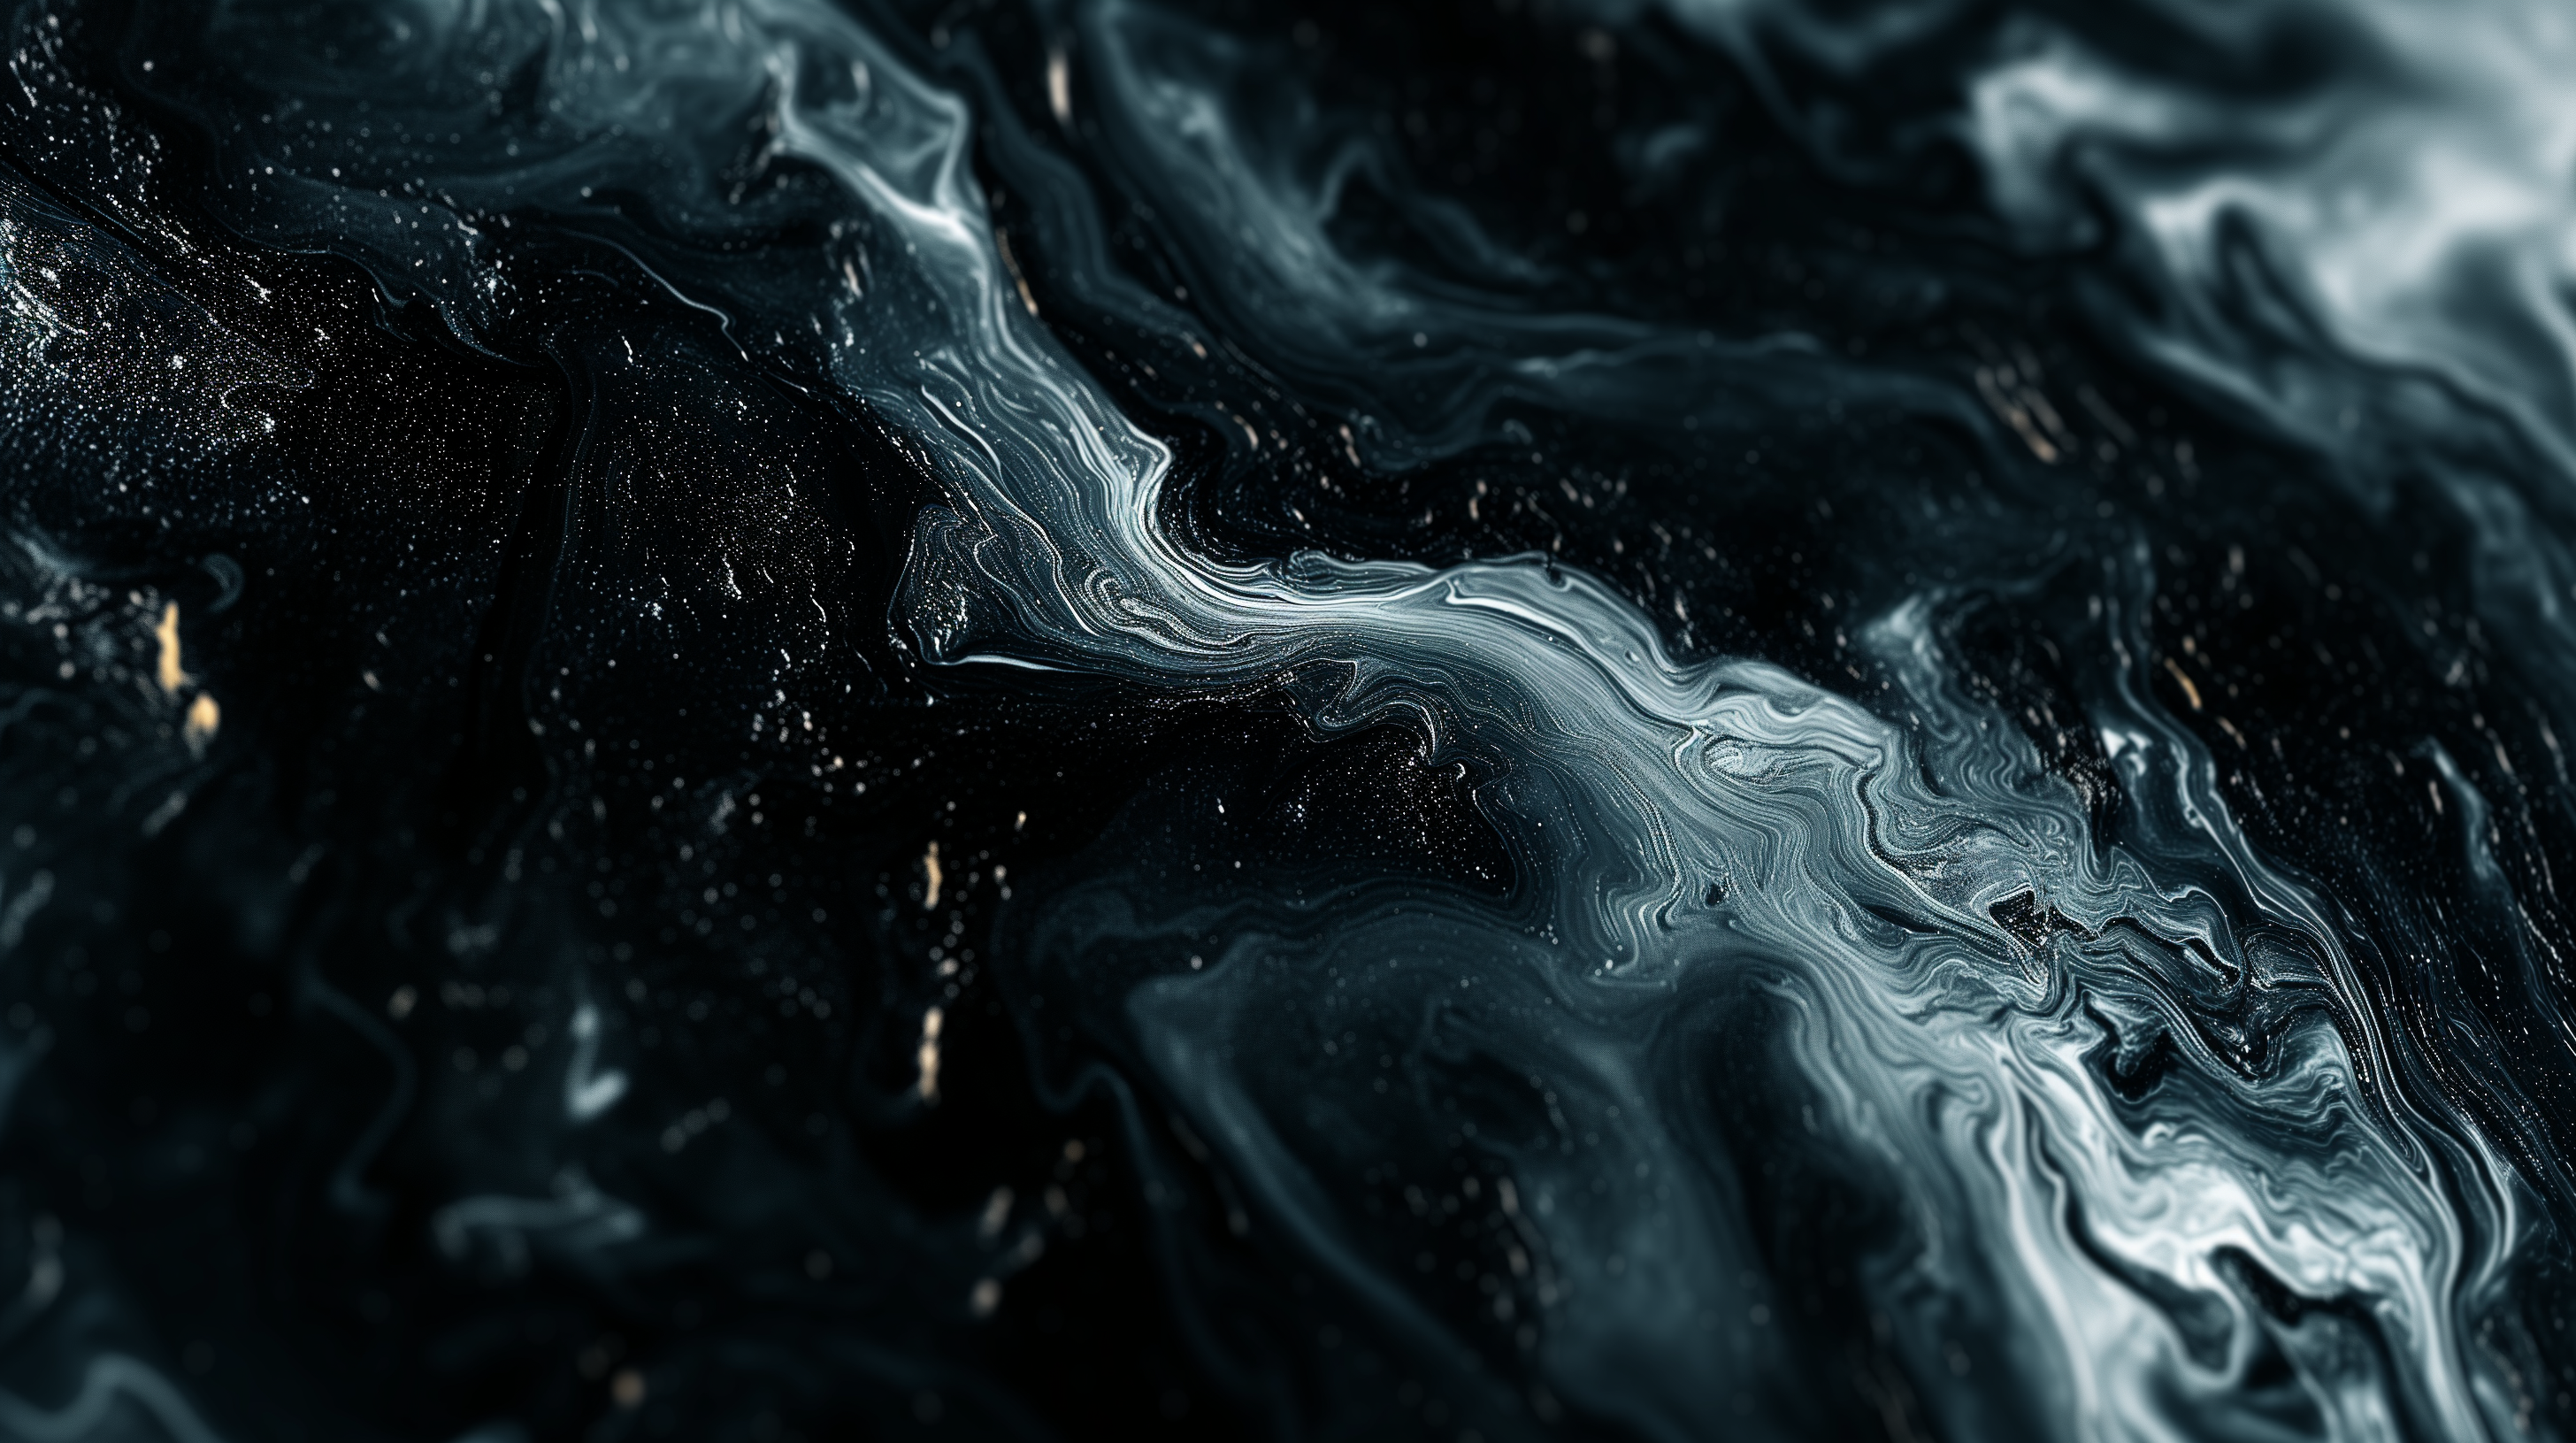 Dark Aesthetic Abstract Swirl HD Wallpaper By Robokoboto